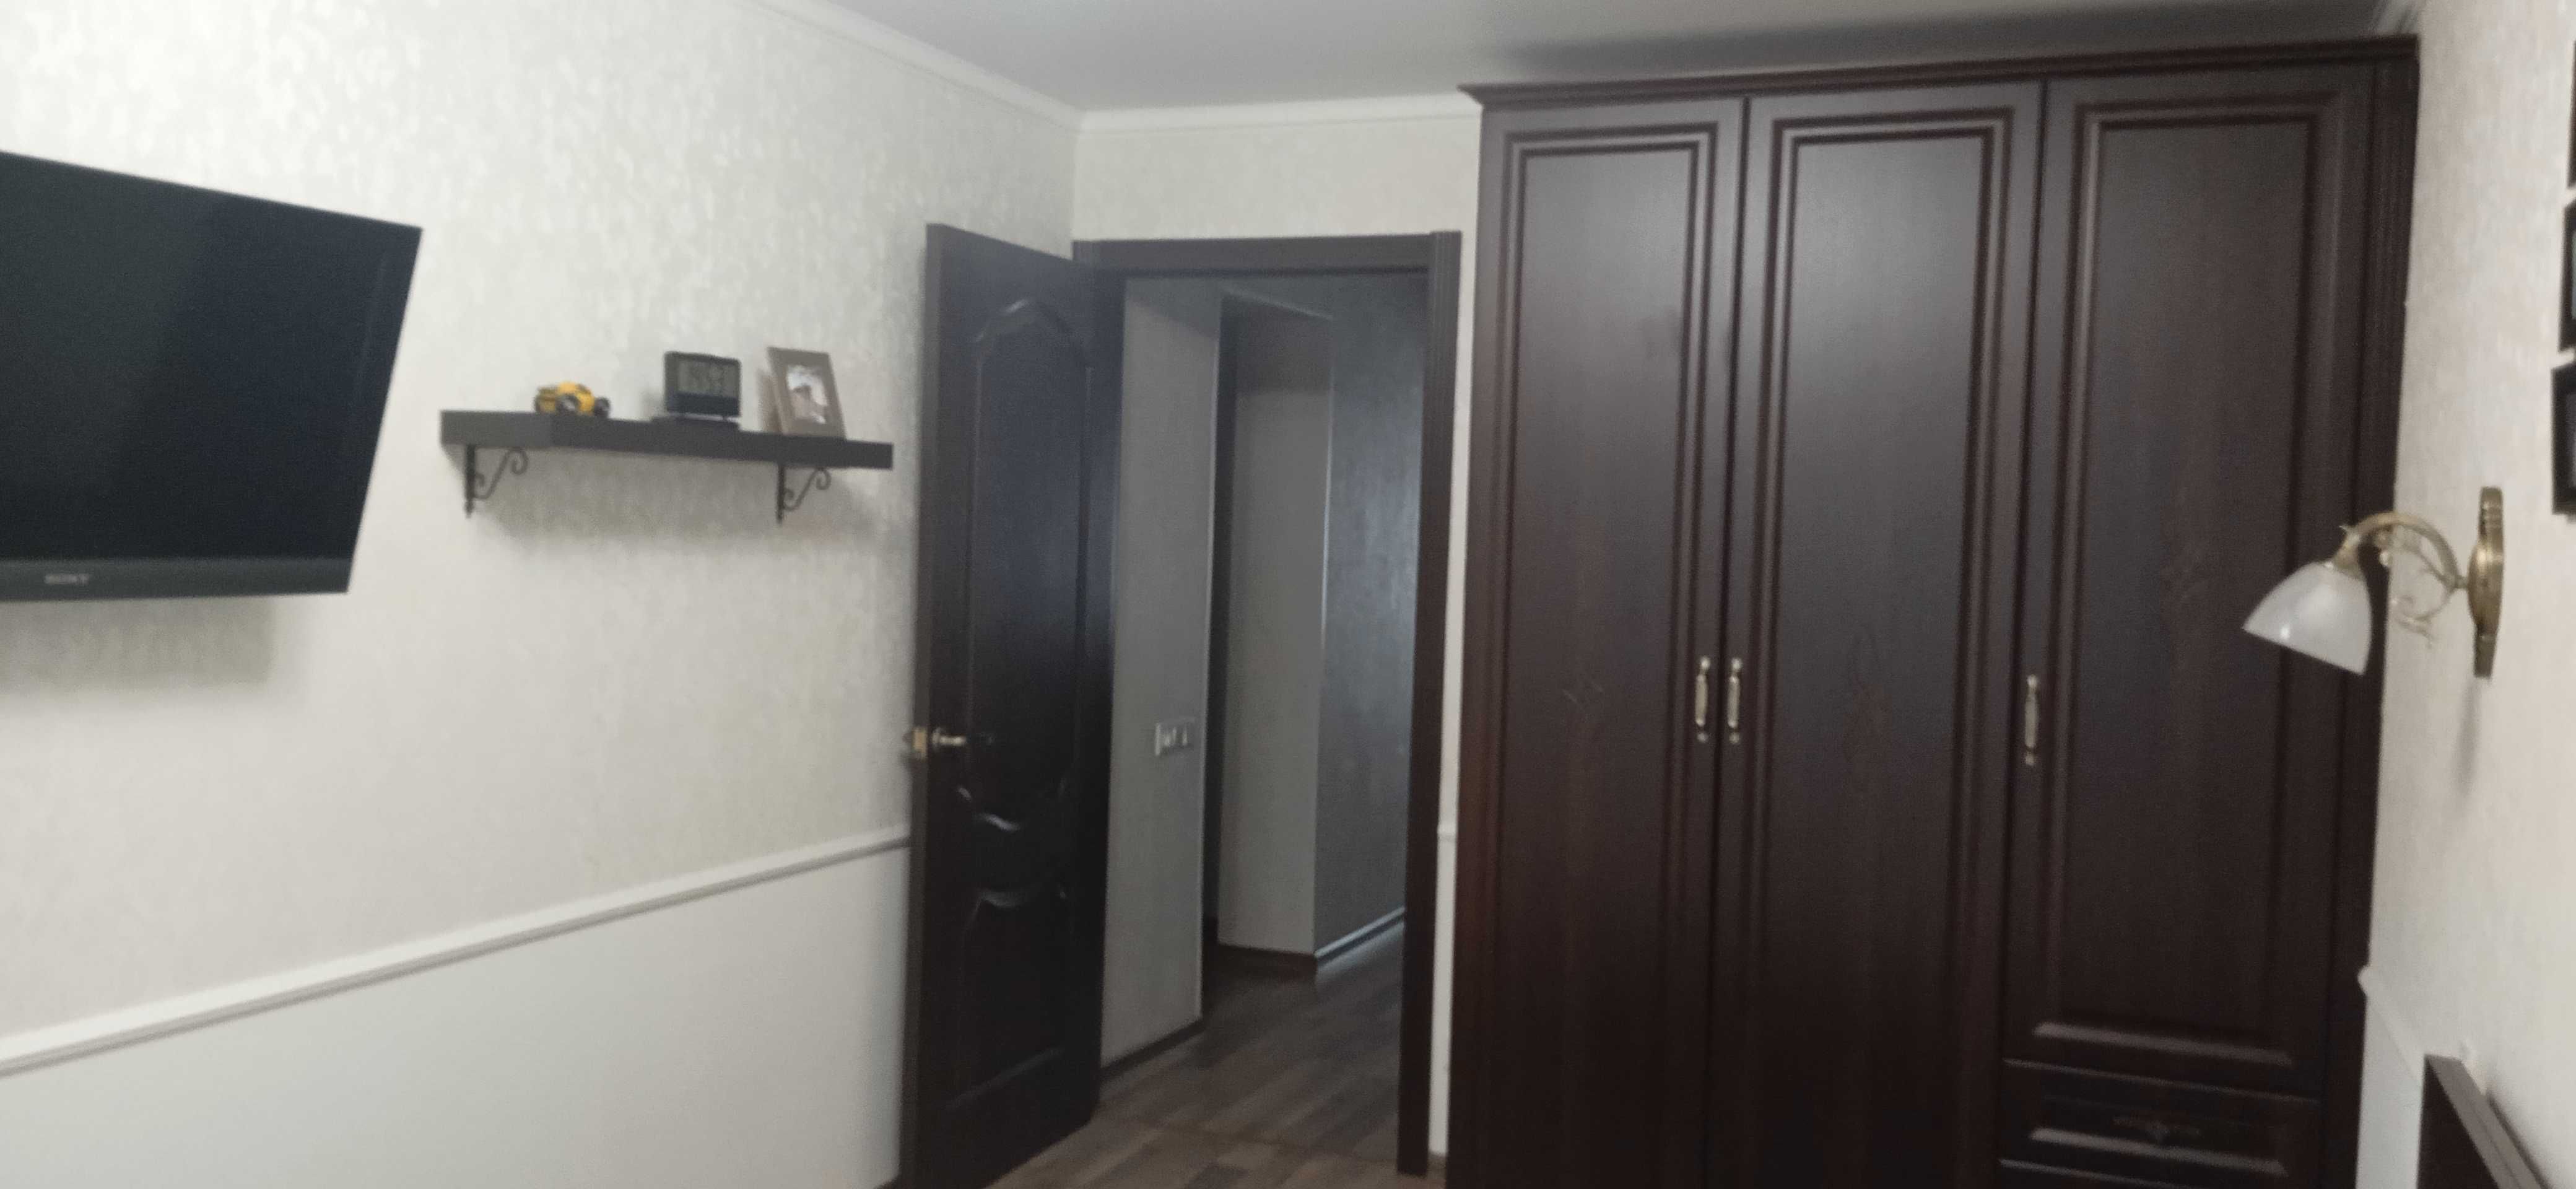 Продам 3-х комнатную квартиру в центре Павло-Кичкаса